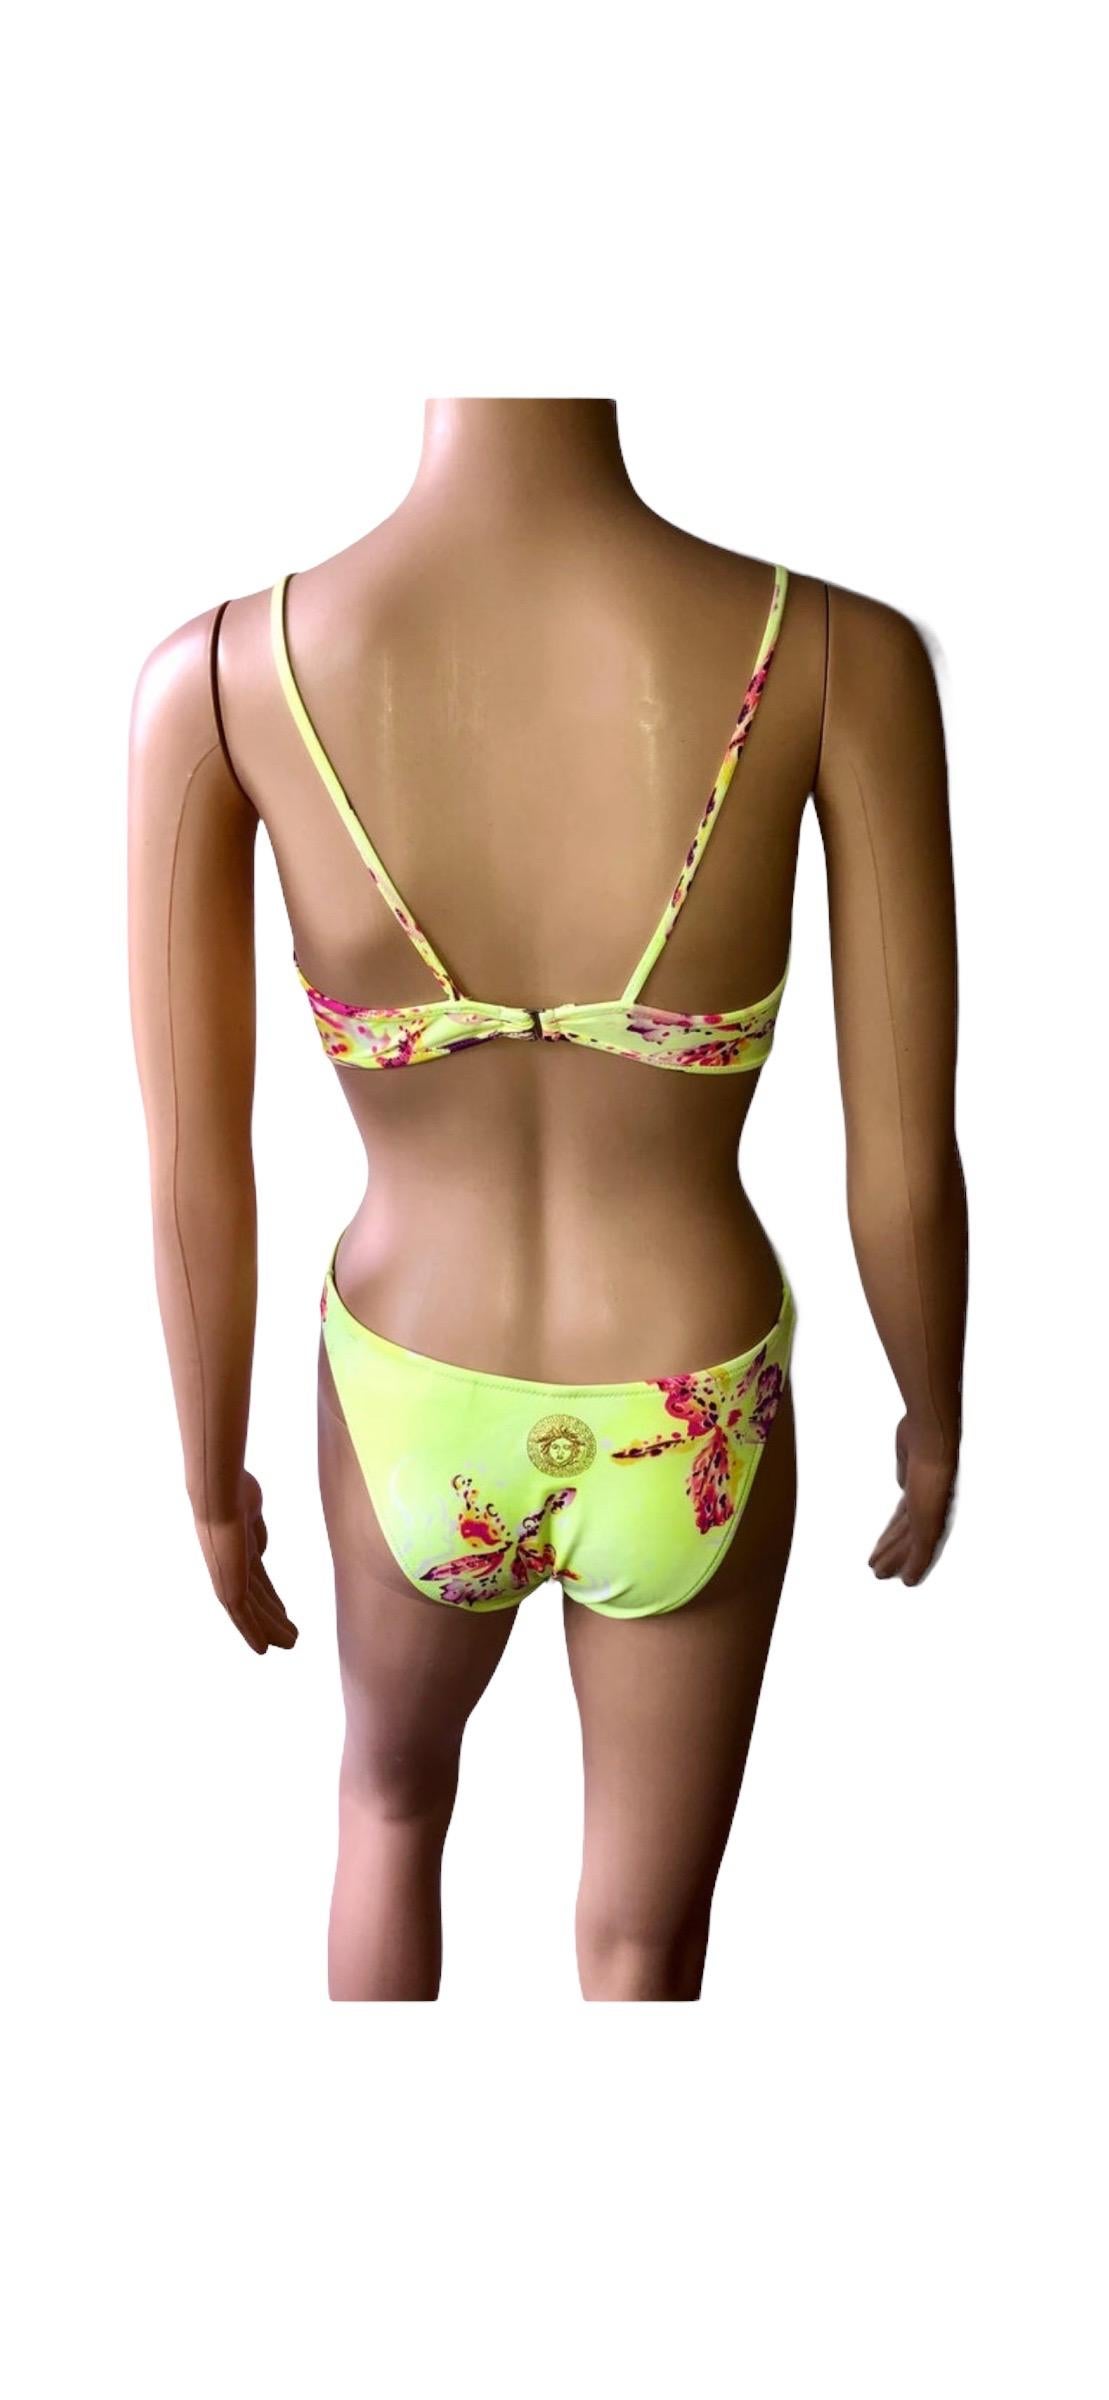 Gianni Versace S/S 2000 Orchid Neon Two-Piece Bikini Set Swimsuit Swimwear  For Sale 5